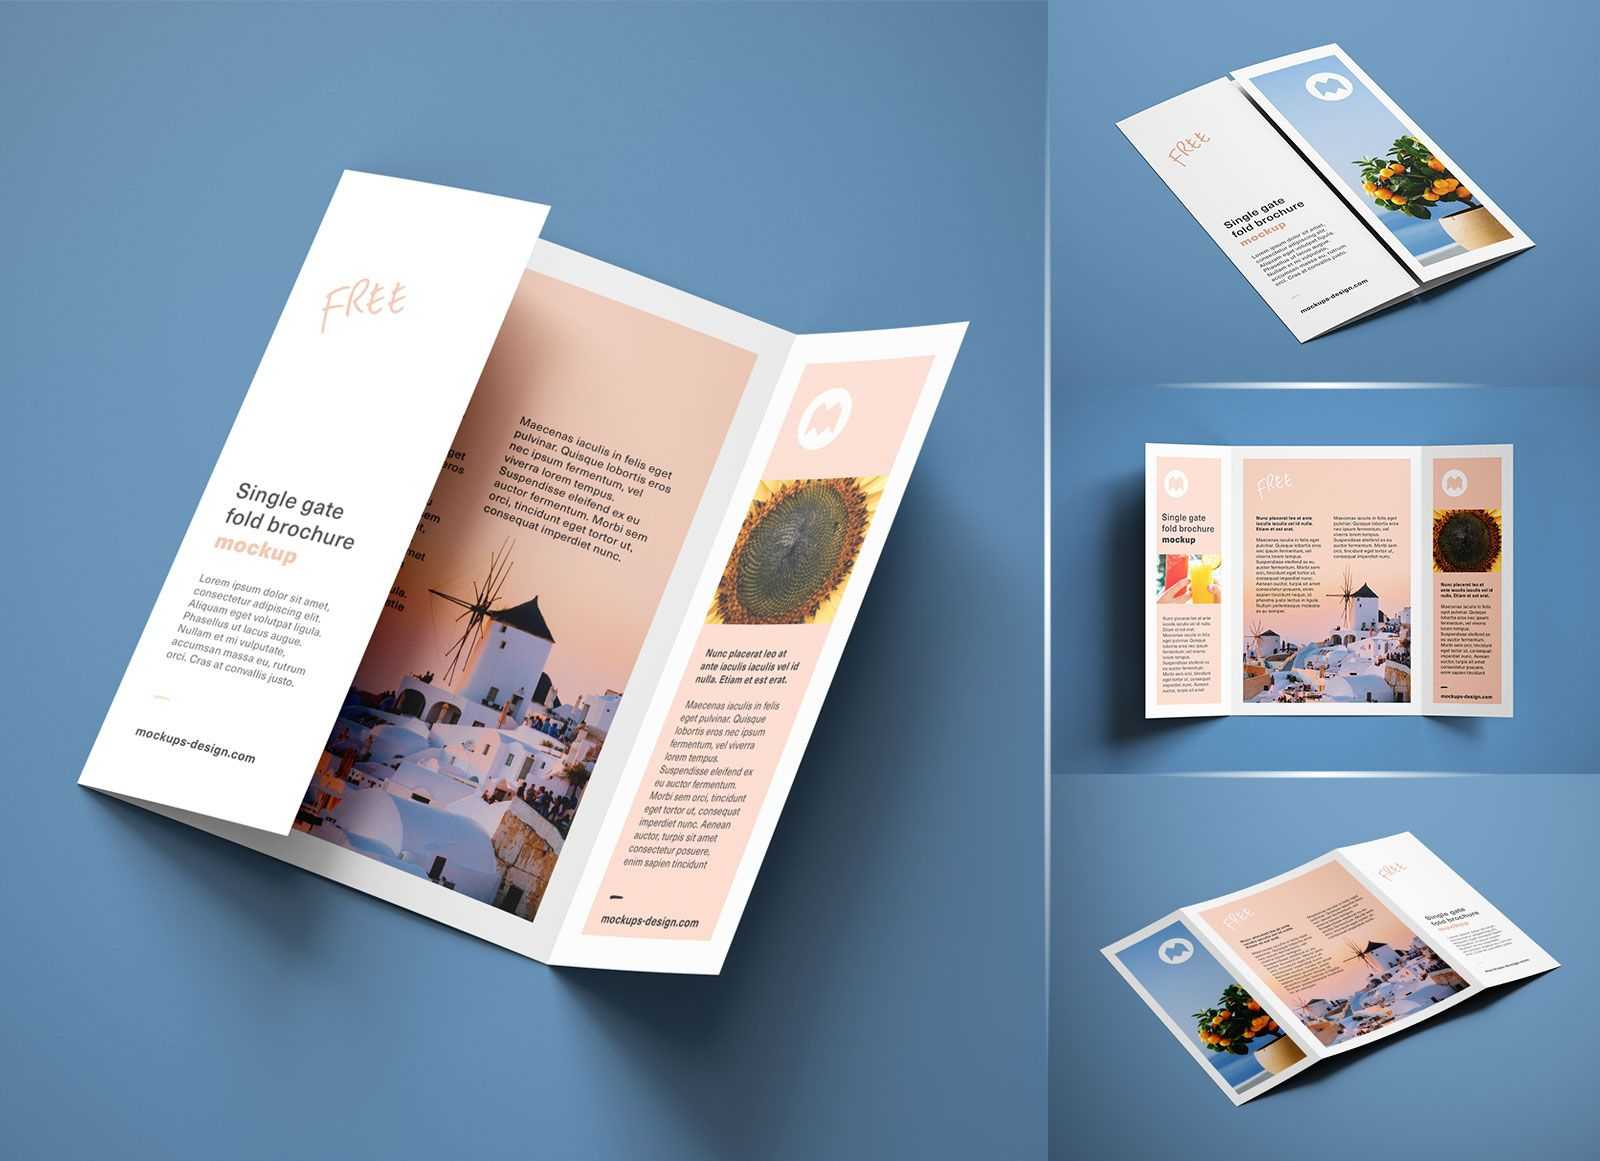 Free A4 Single Gate Fold Brochure Mockup Psd Set | Graphic With Single Page Brochure Templates Psd